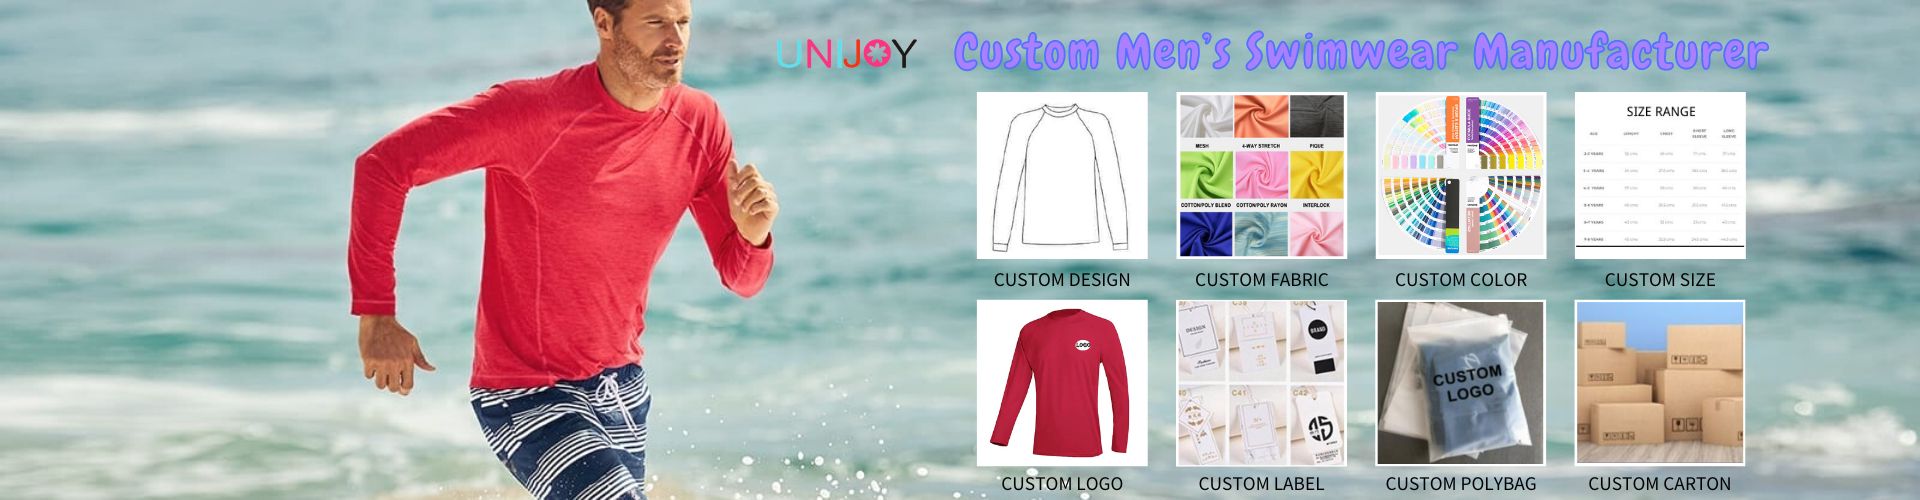 Custom Men’s Swimwear Manufacturer